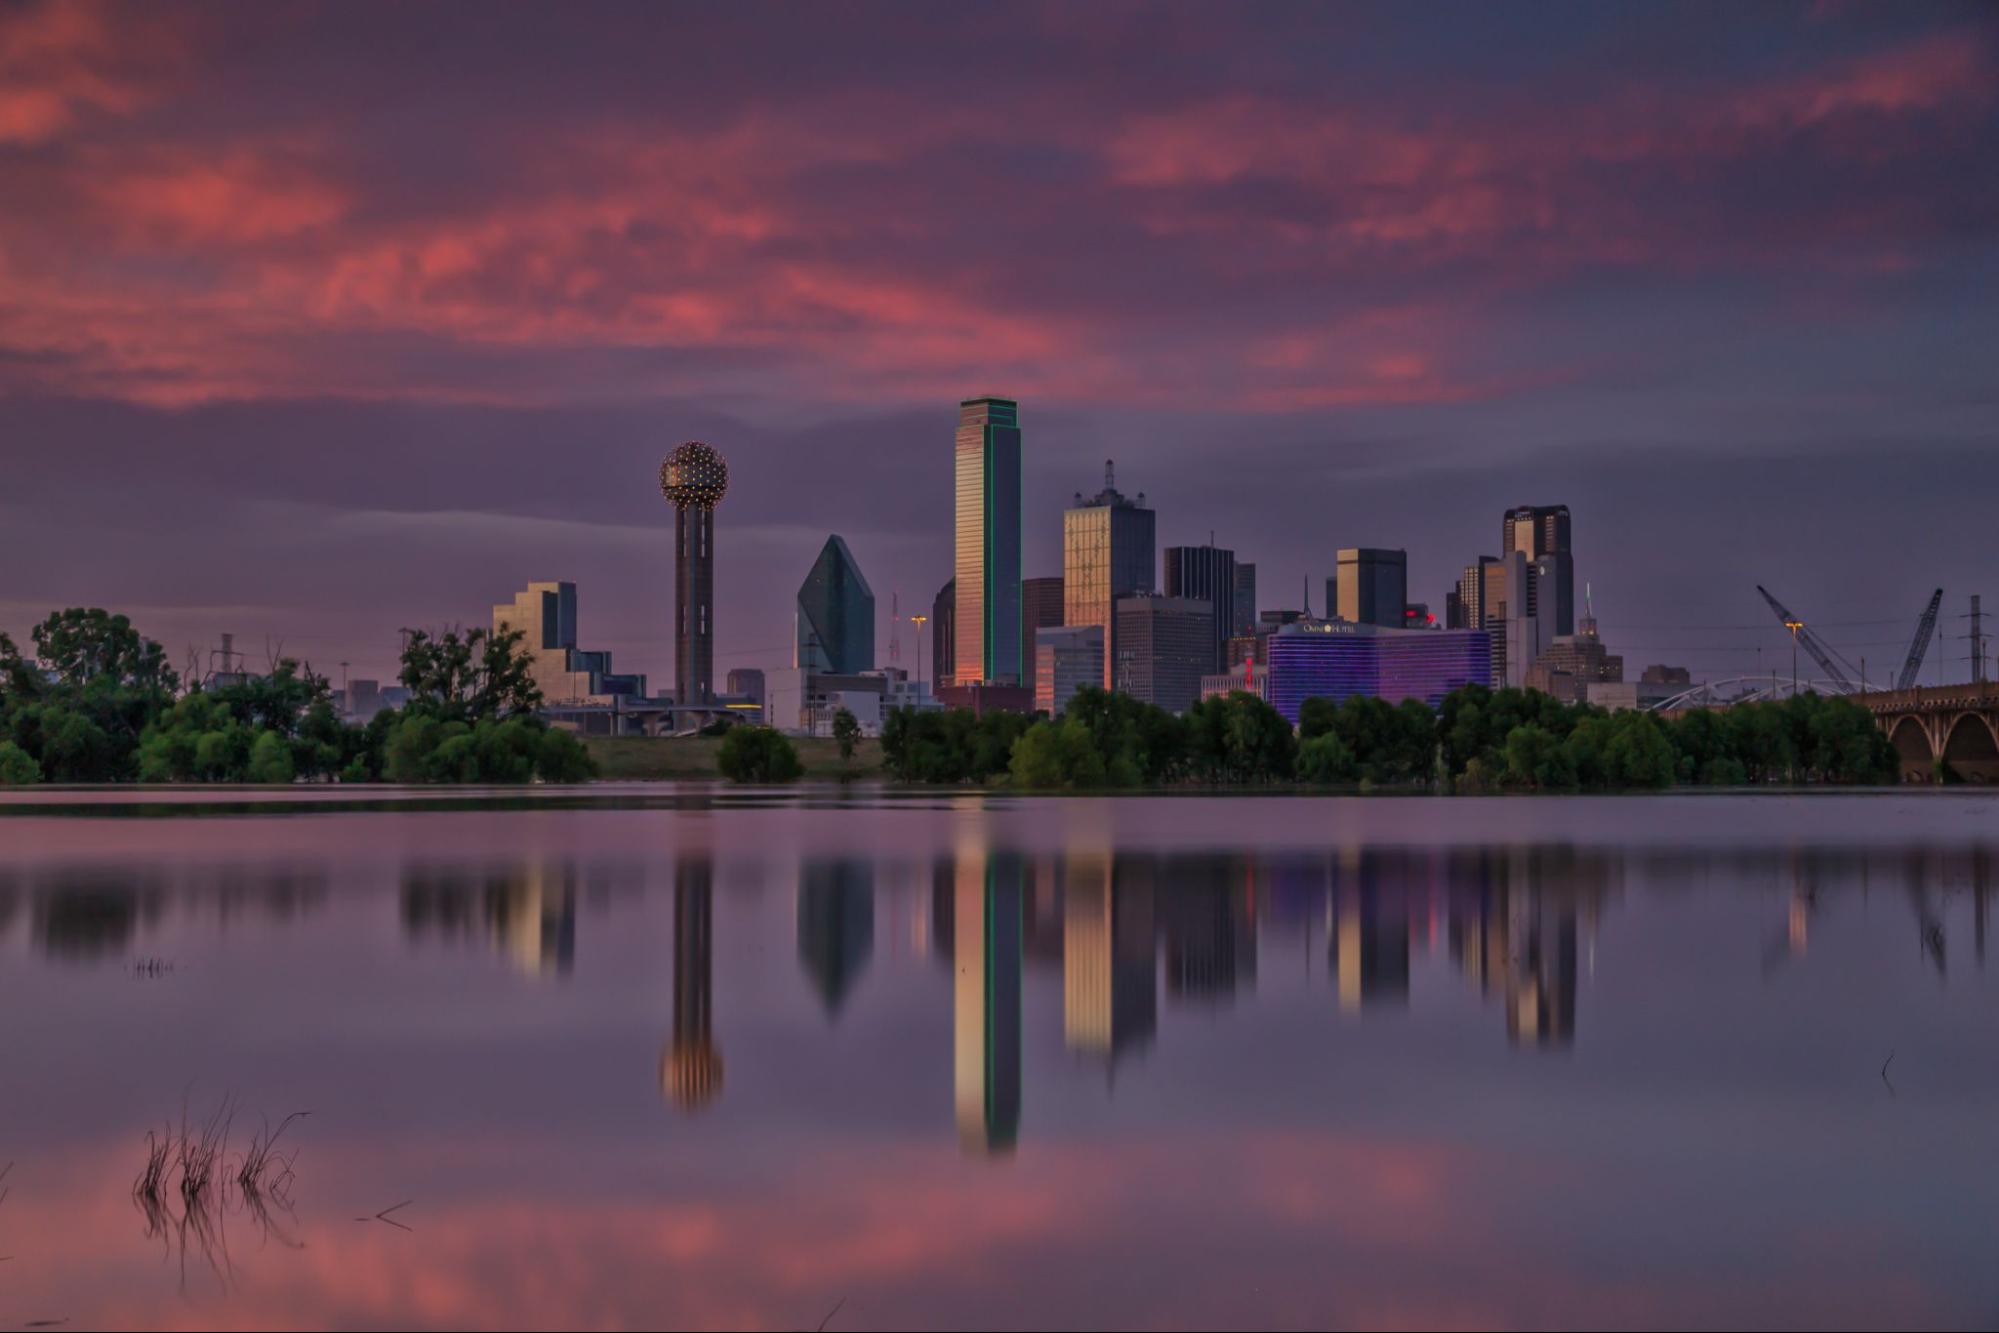 Skyline view of Dallas, Texas